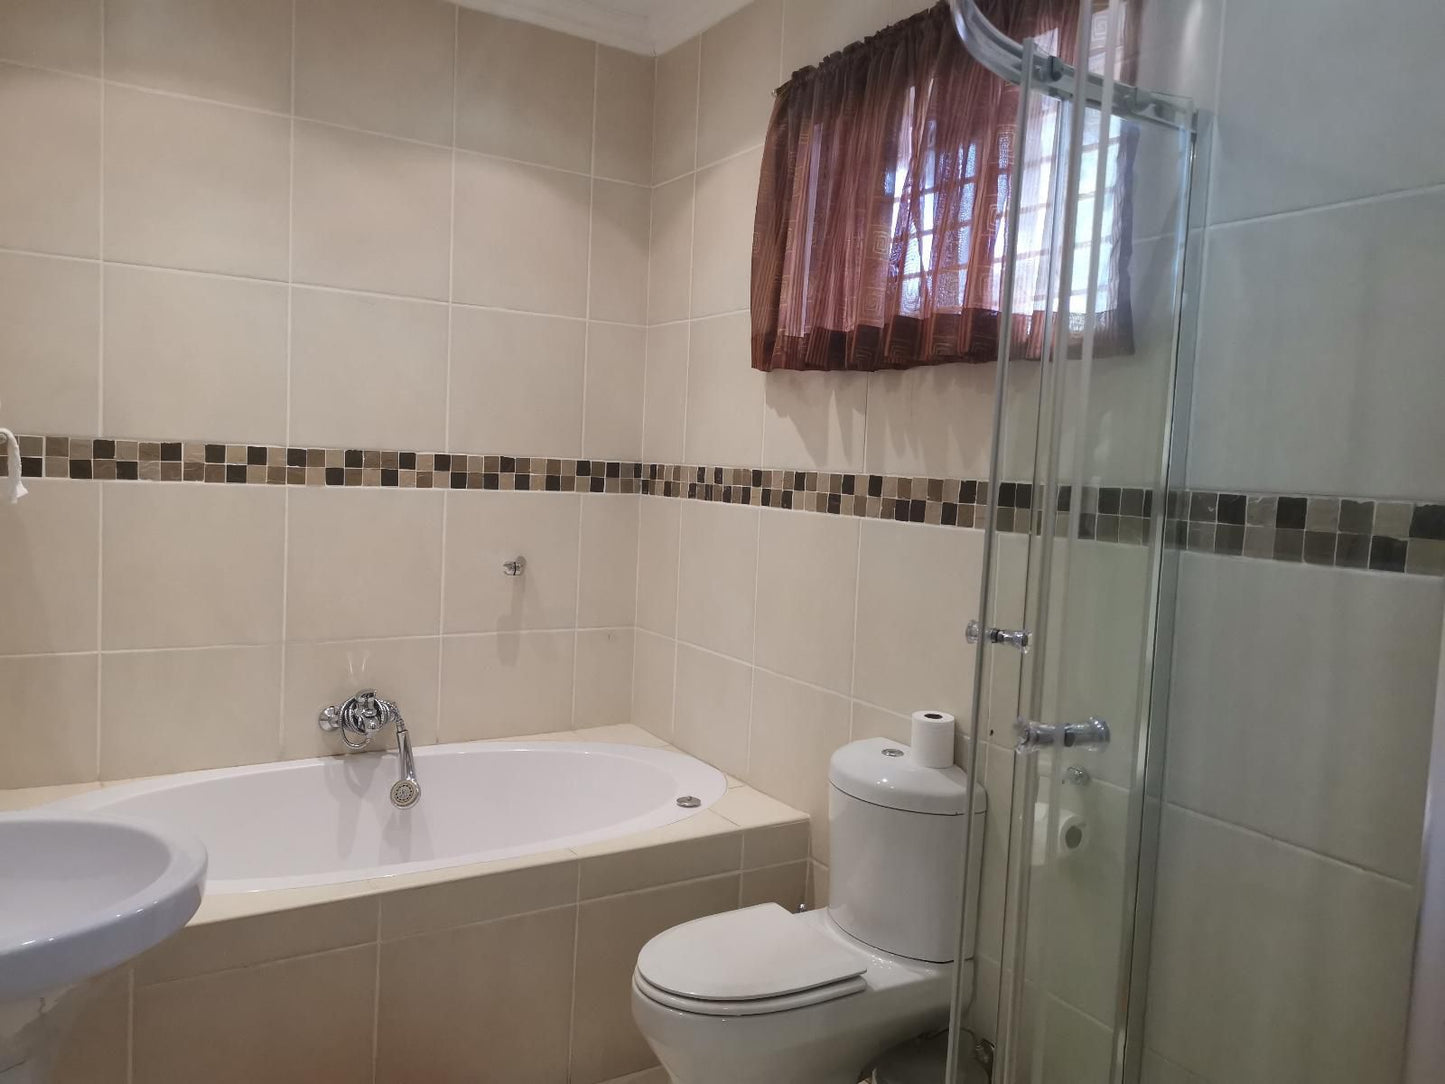 Aquila Guest House Waterkloof Ridge Pretoria Tshwane Gauteng South Africa Unsaturated, Bathroom